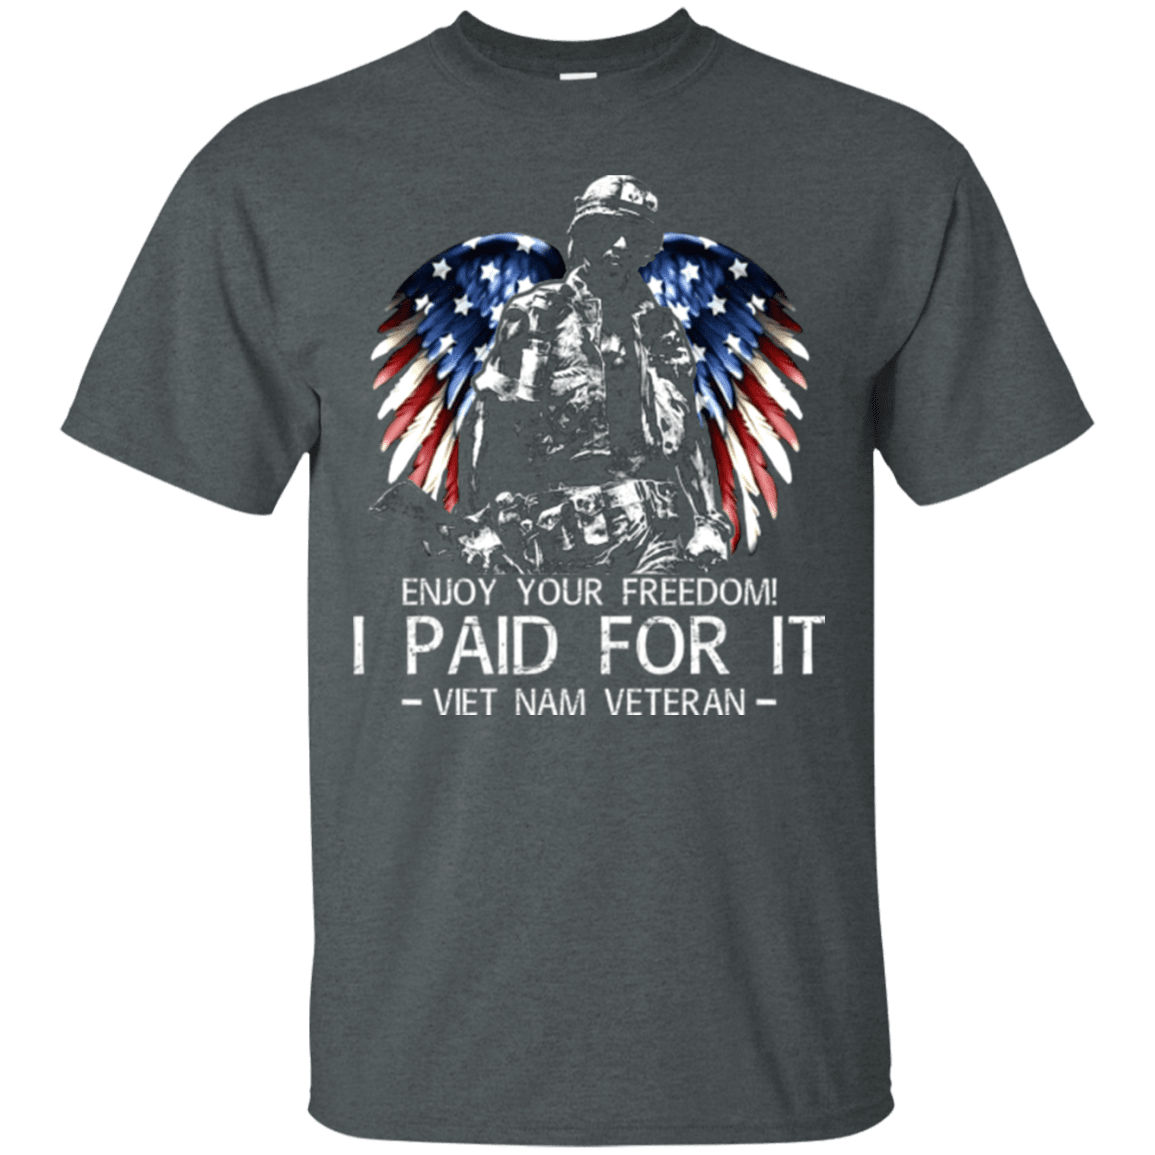 Military T-Shirt "Vietnam Veteran - Enjoy your freedom I paid for it Men" Front-TShirt-General-Veterans Nation